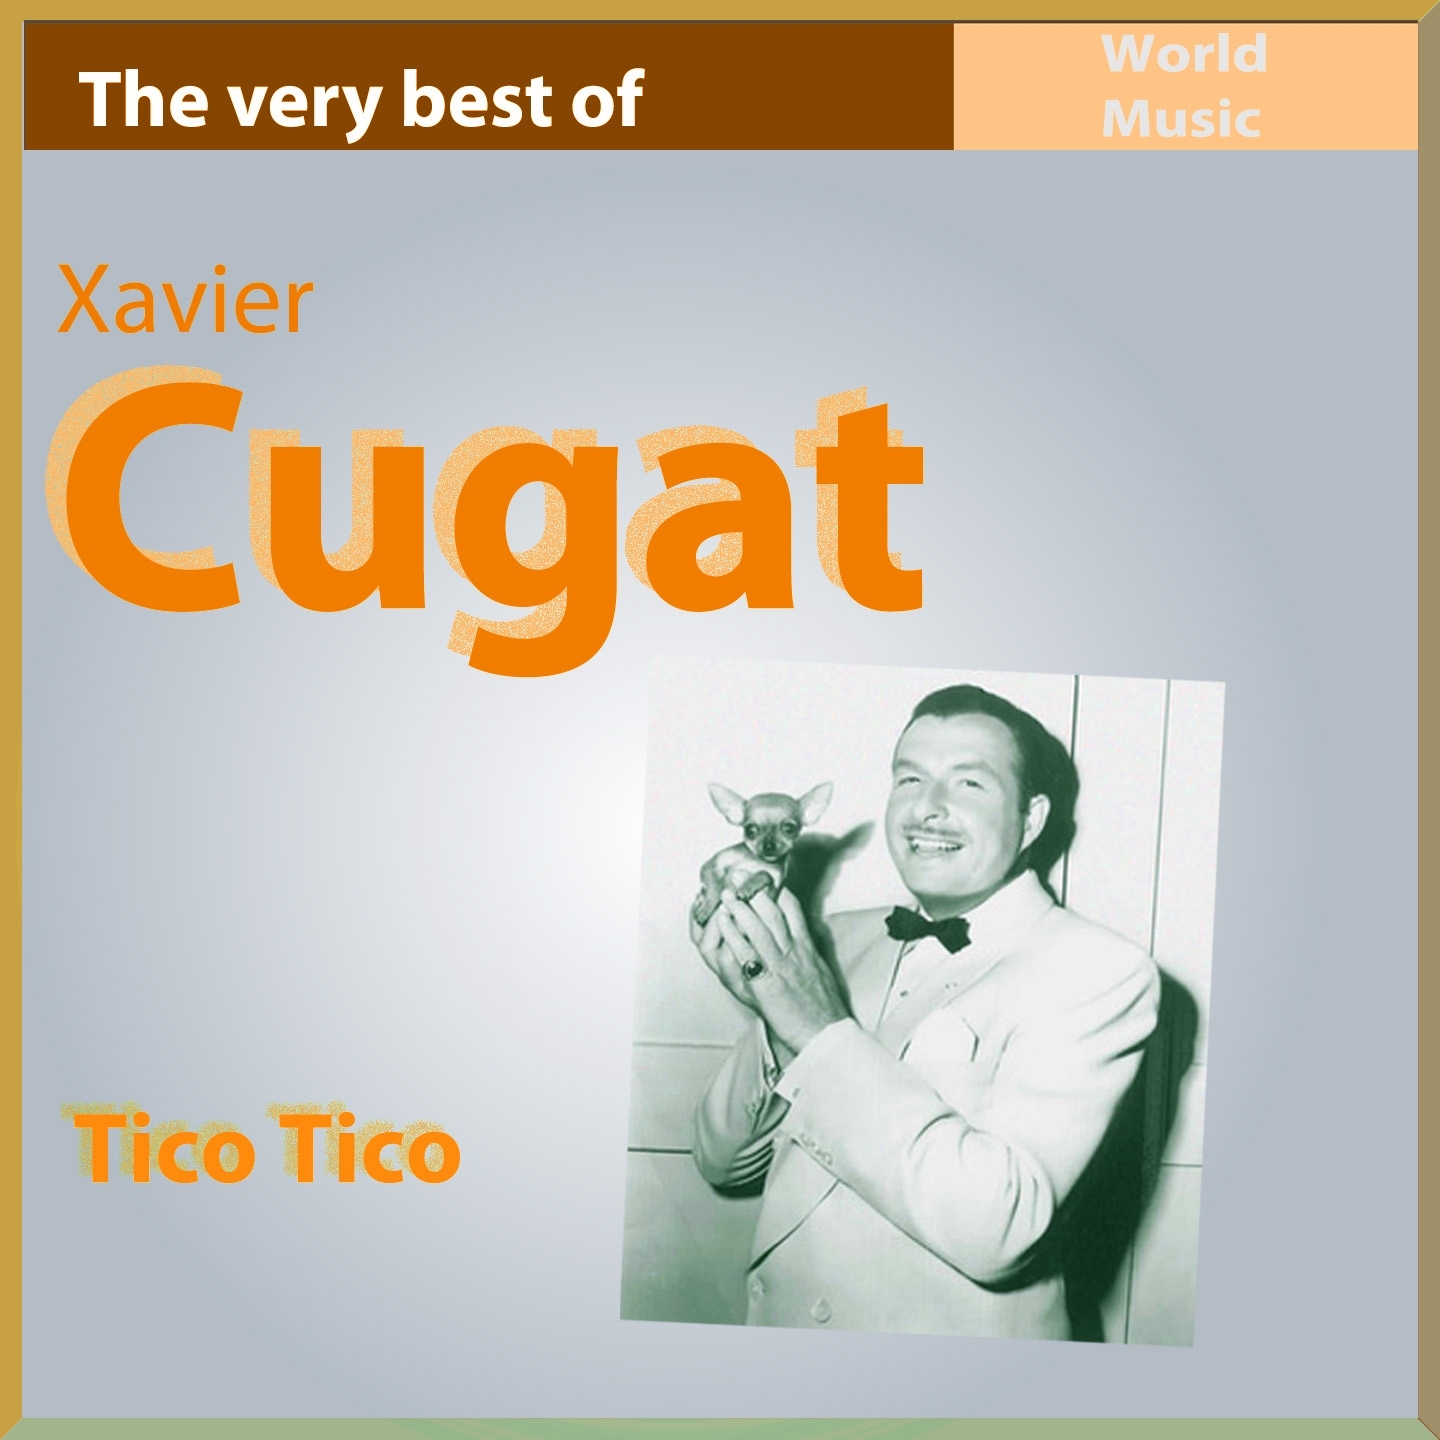 The Very Best of Xavier Cugat: Tico Tico